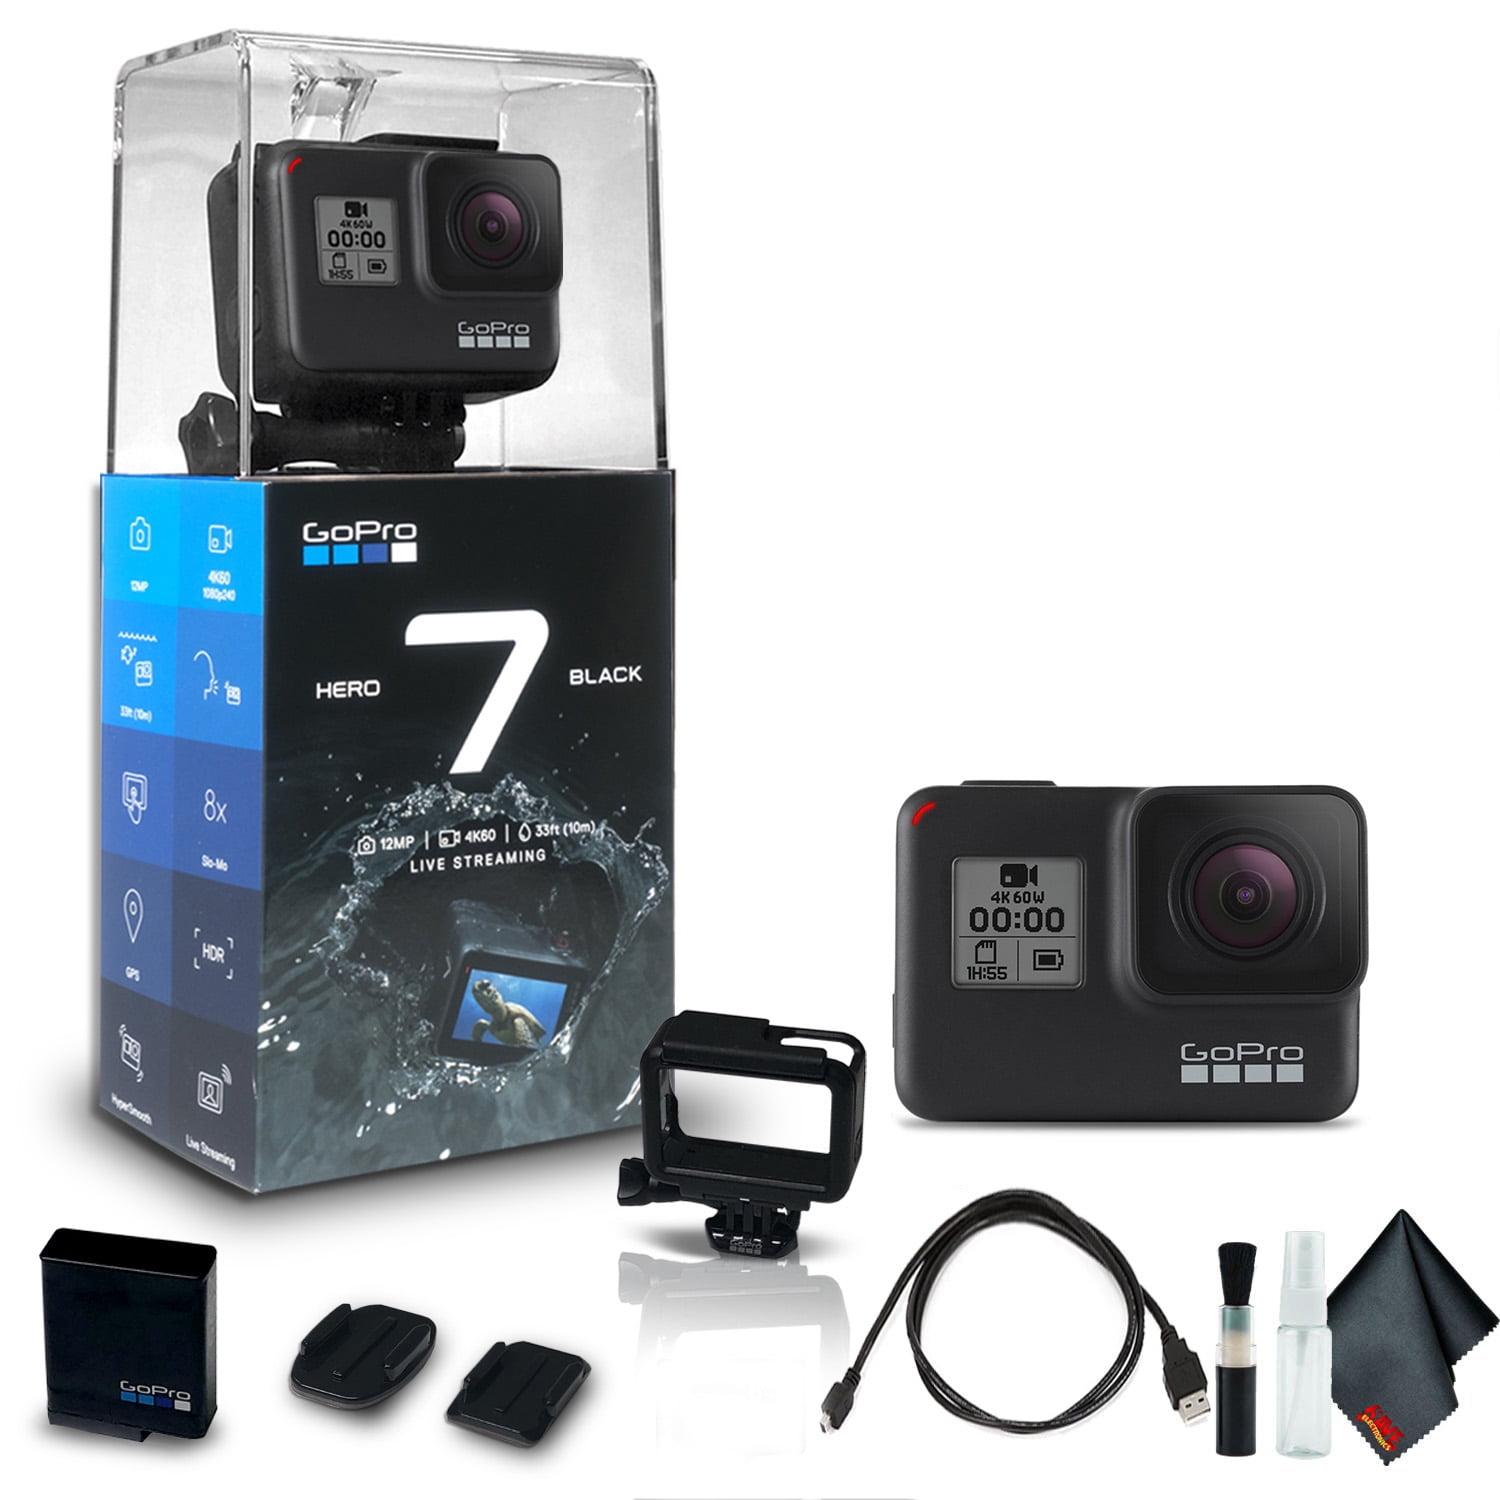 kontoførende I hele verden skammel GoPro HERO7 Black - Waterproof Action Camera with Touch Screen, 4K HD  Video, 12MP Photos, Live Streaming and Stabilizati - Walmart.com